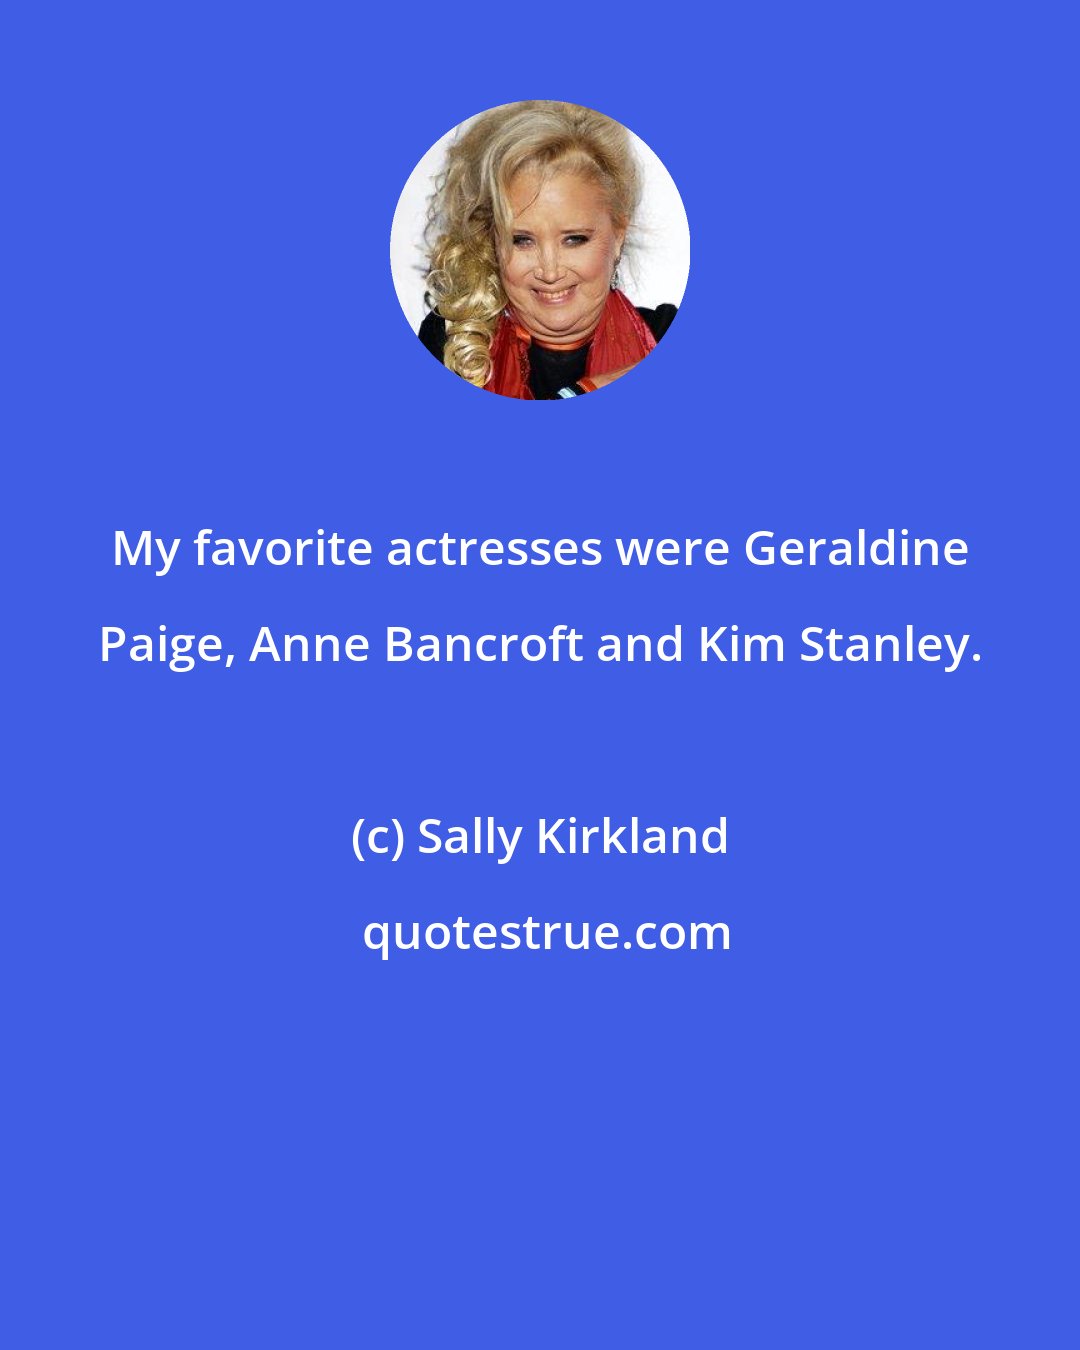 Sally Kirkland: My favorite actresses were Geraldine Paige, Anne Bancroft and Kim Stanley.